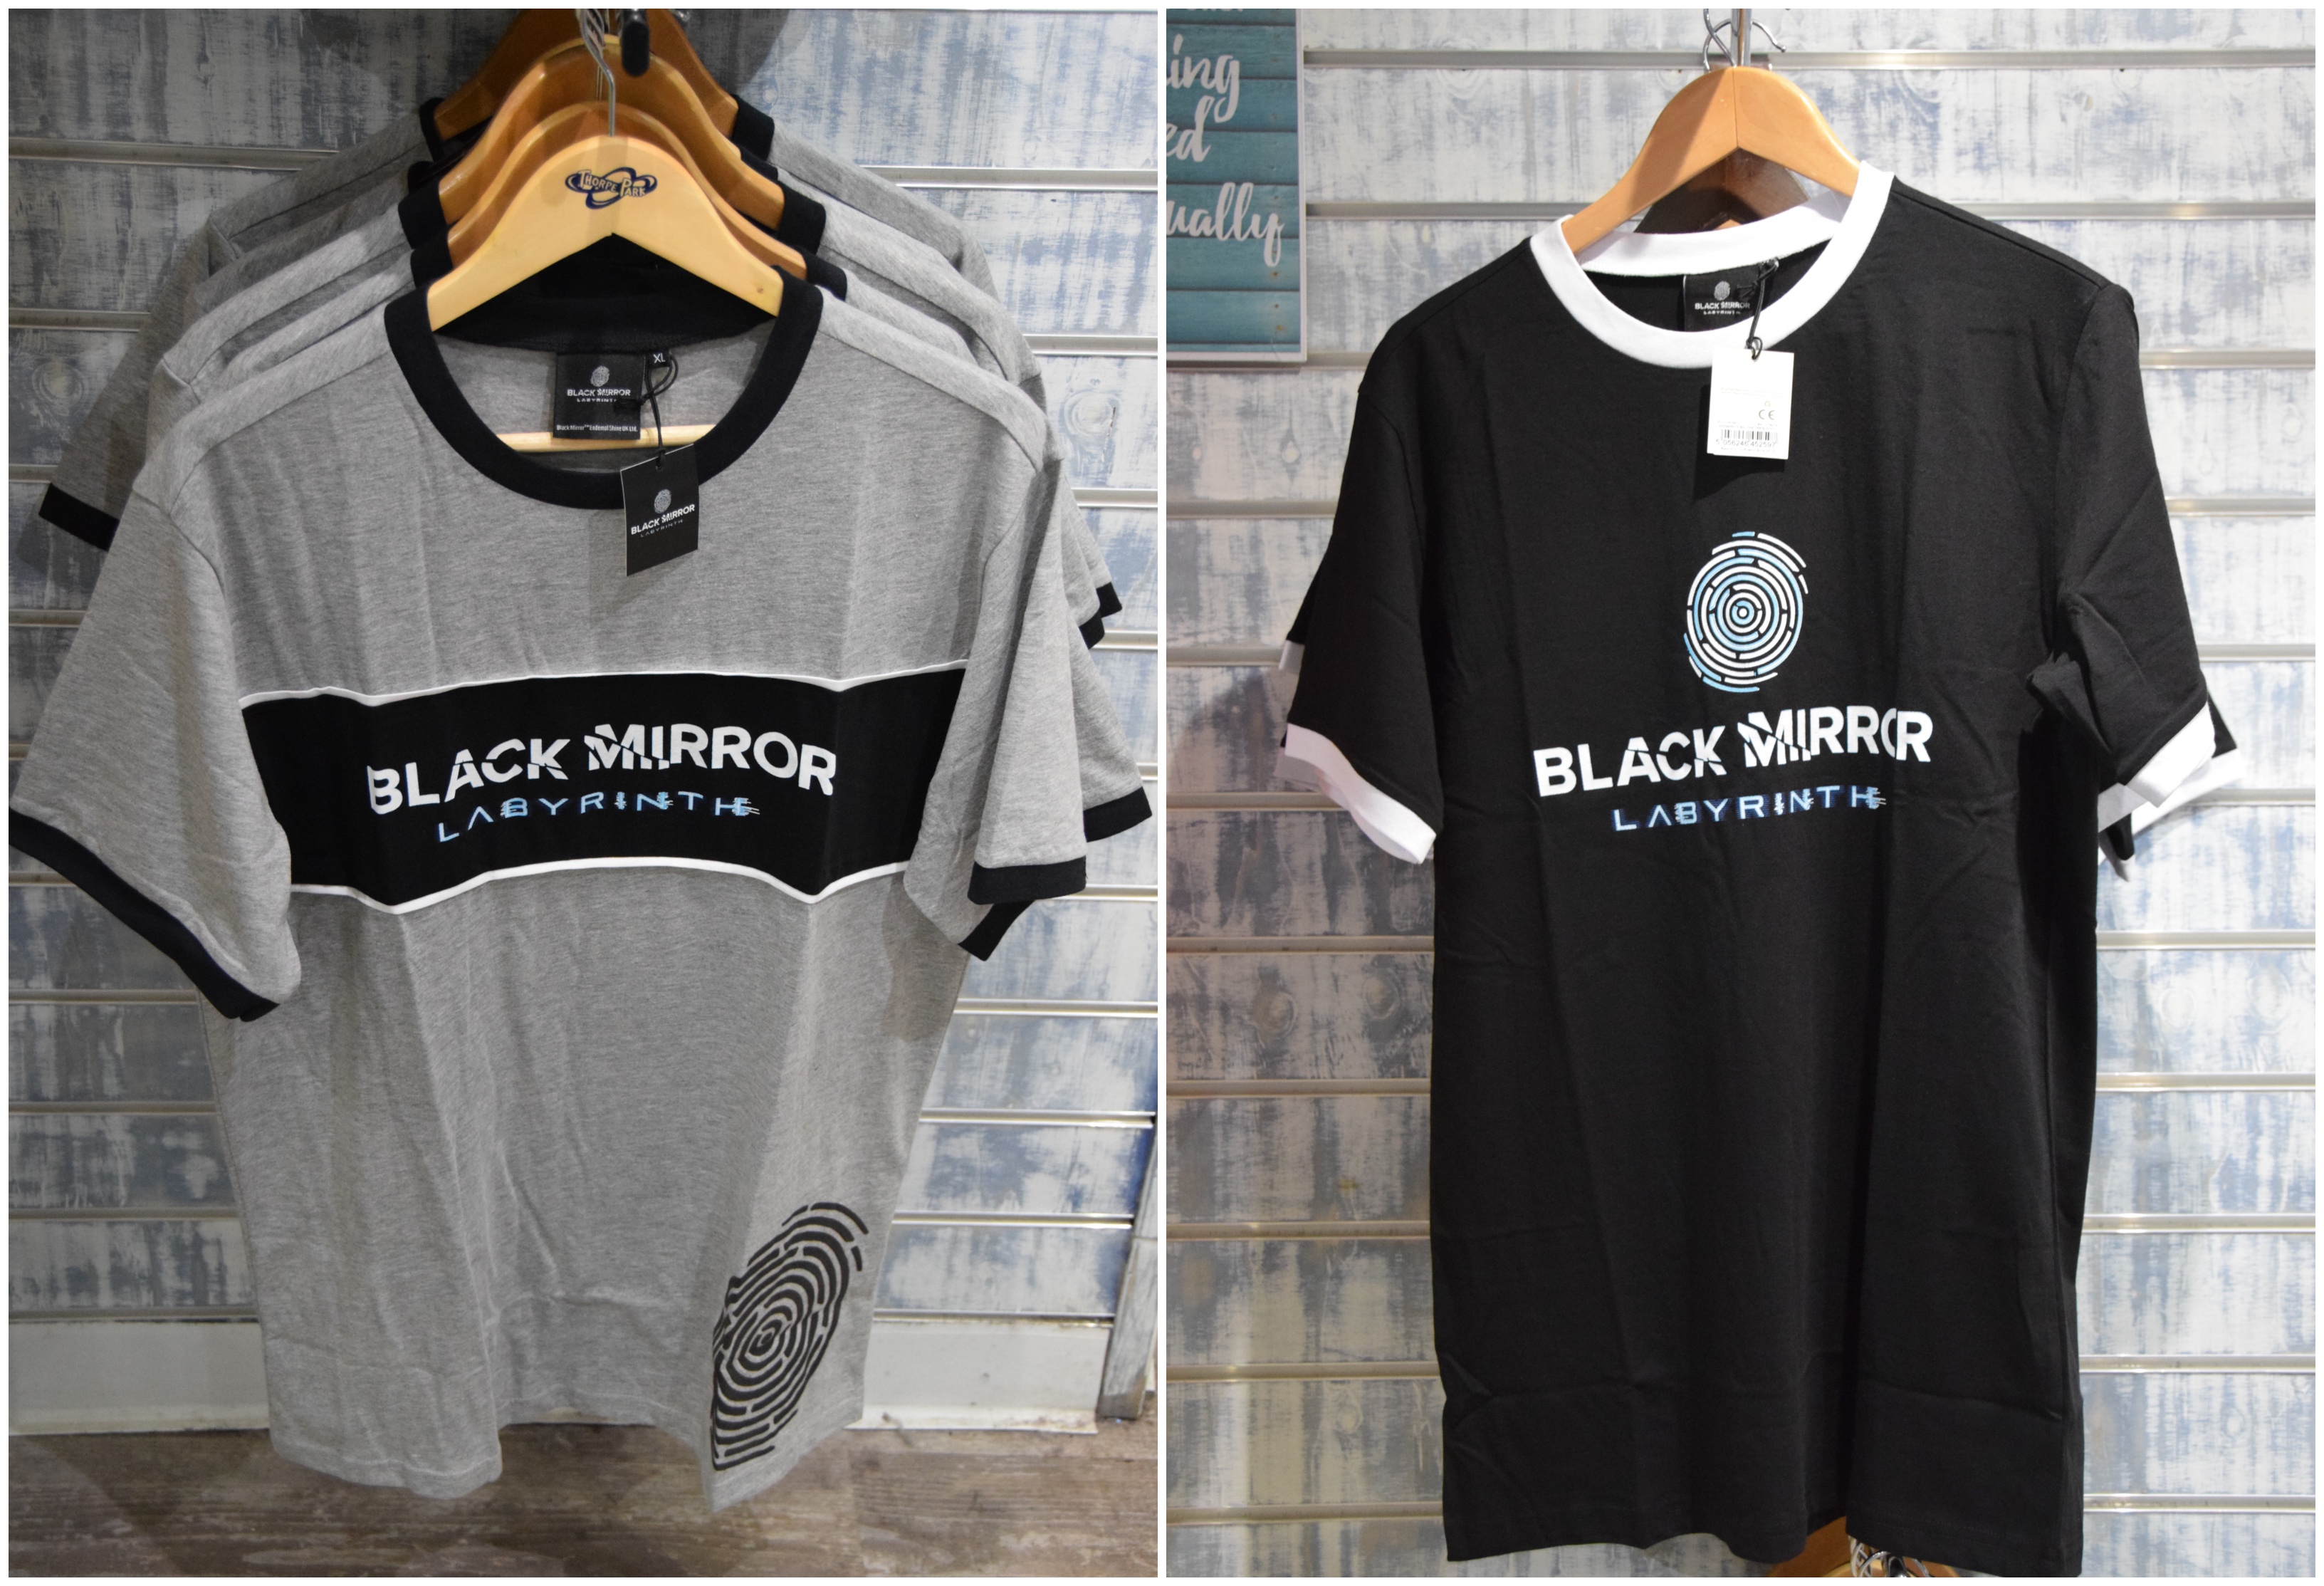 Black Mirror Labyrinth Merchandise